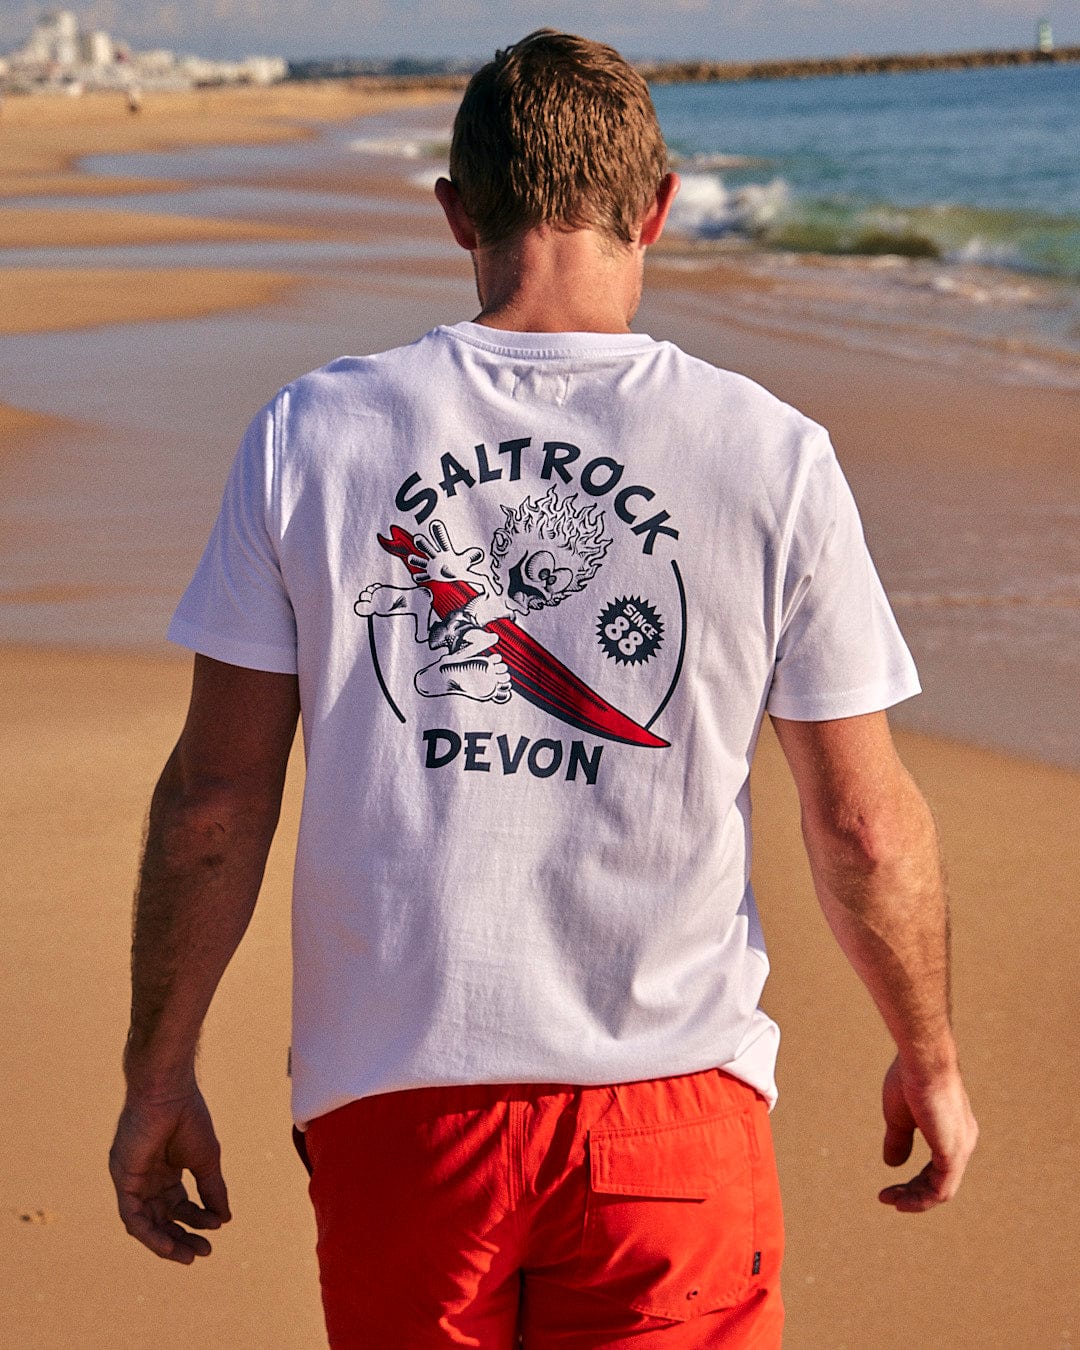 A man walking on the beach wearing a white t - shirt that says Saltrock Wave Rider Devon - Mens Short Sleeve T-Shirt - White.